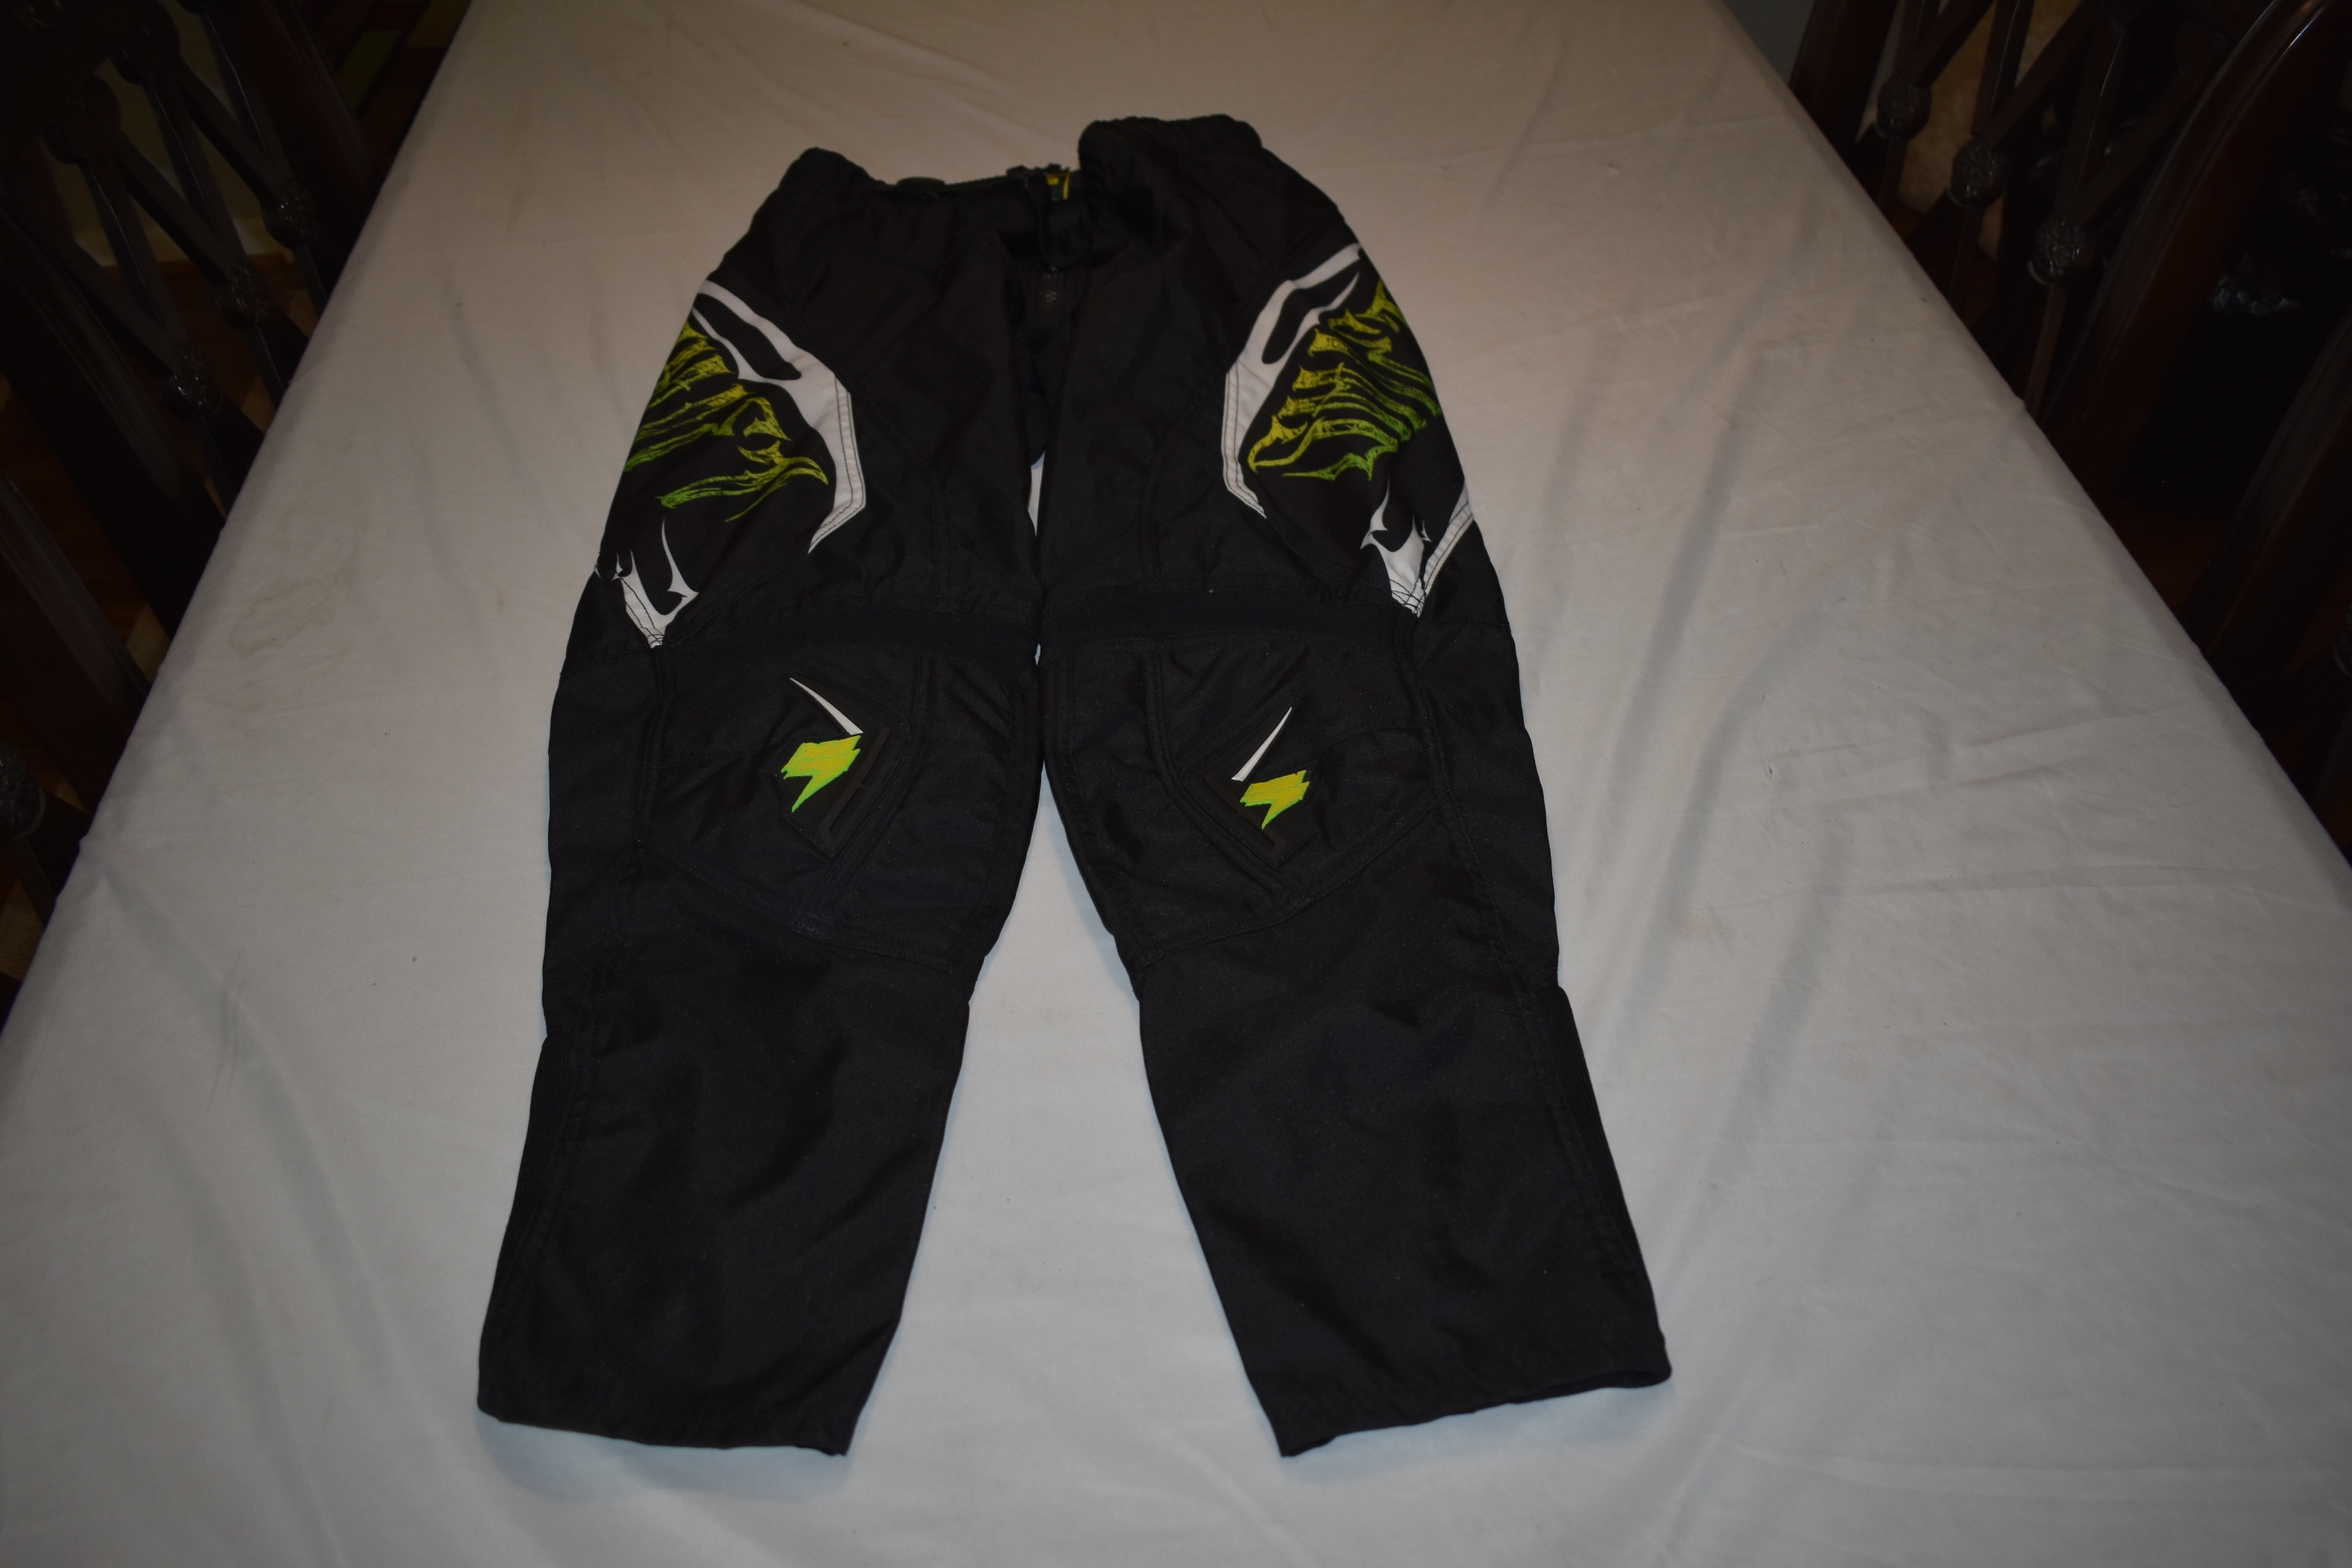 Shift MX Assault Motocross Race Pants, Black/White, Size 36 - Great Condition!